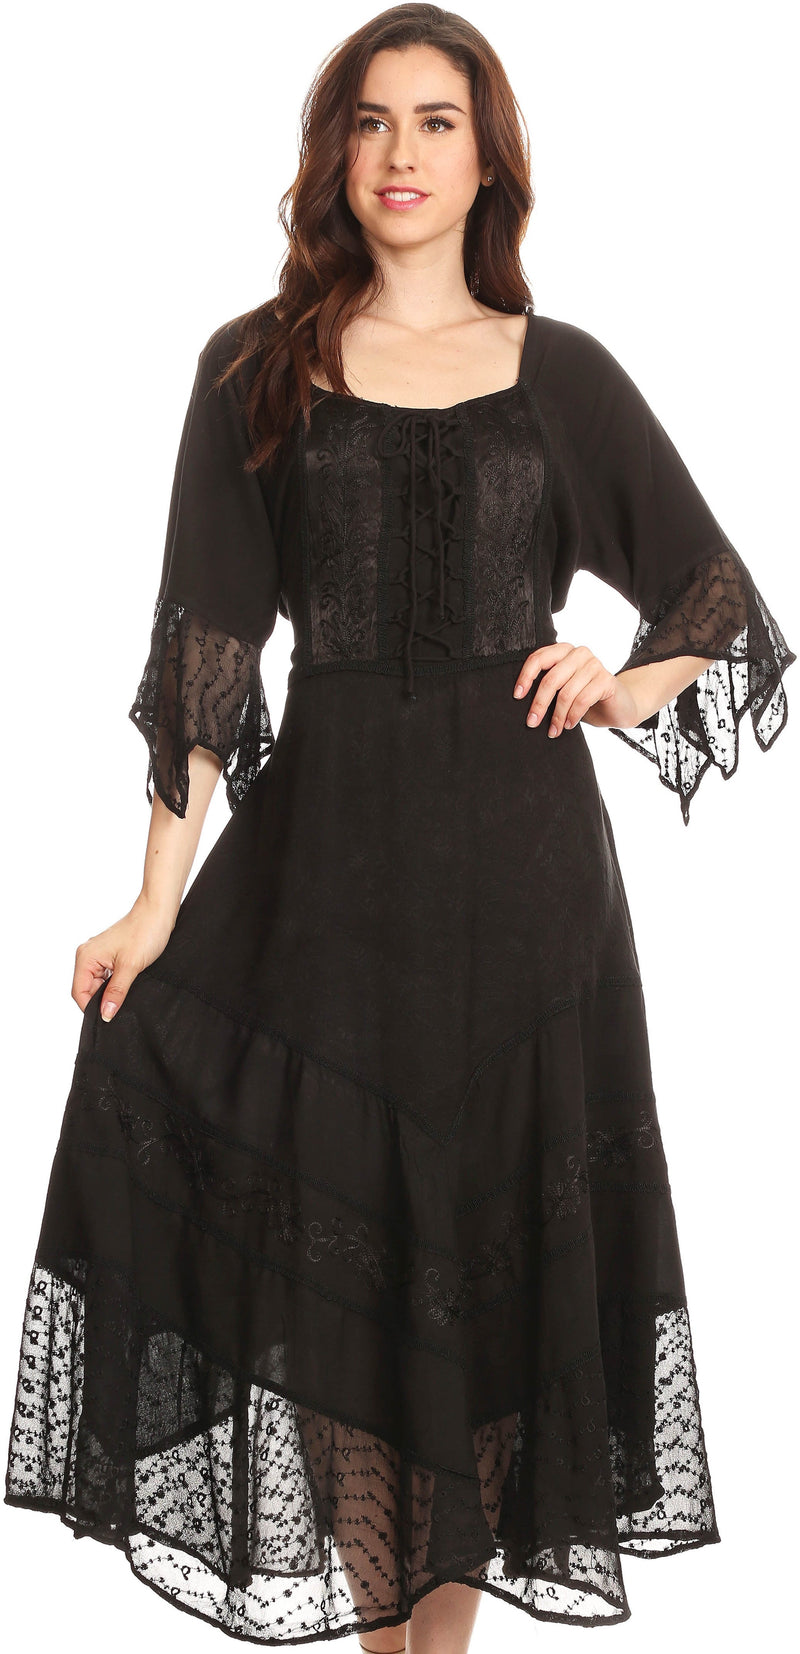 Sakkas Bexley Scoop Neck Bell Sleeve Bohemian Gypsy Embroidered Corset Dress